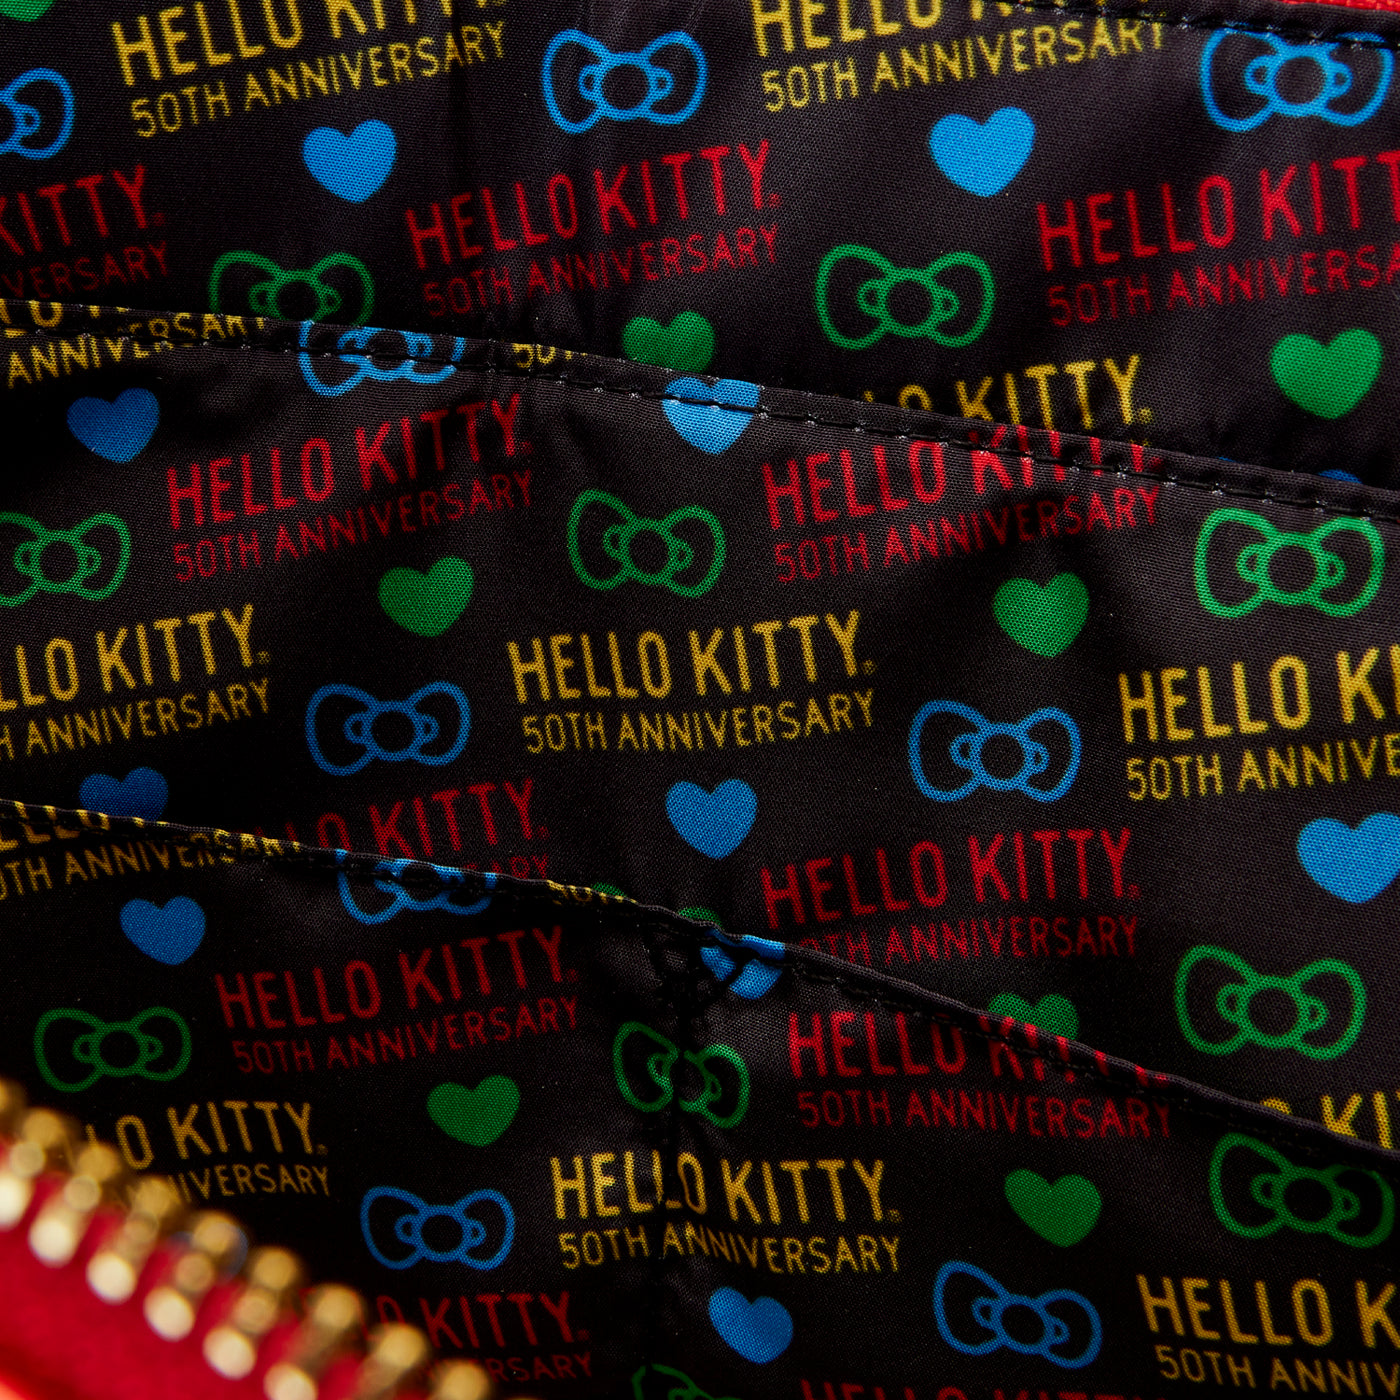 Sanrio Hello Kitty 50th Anniversary Metallic Tote Bag W/Coin Bag